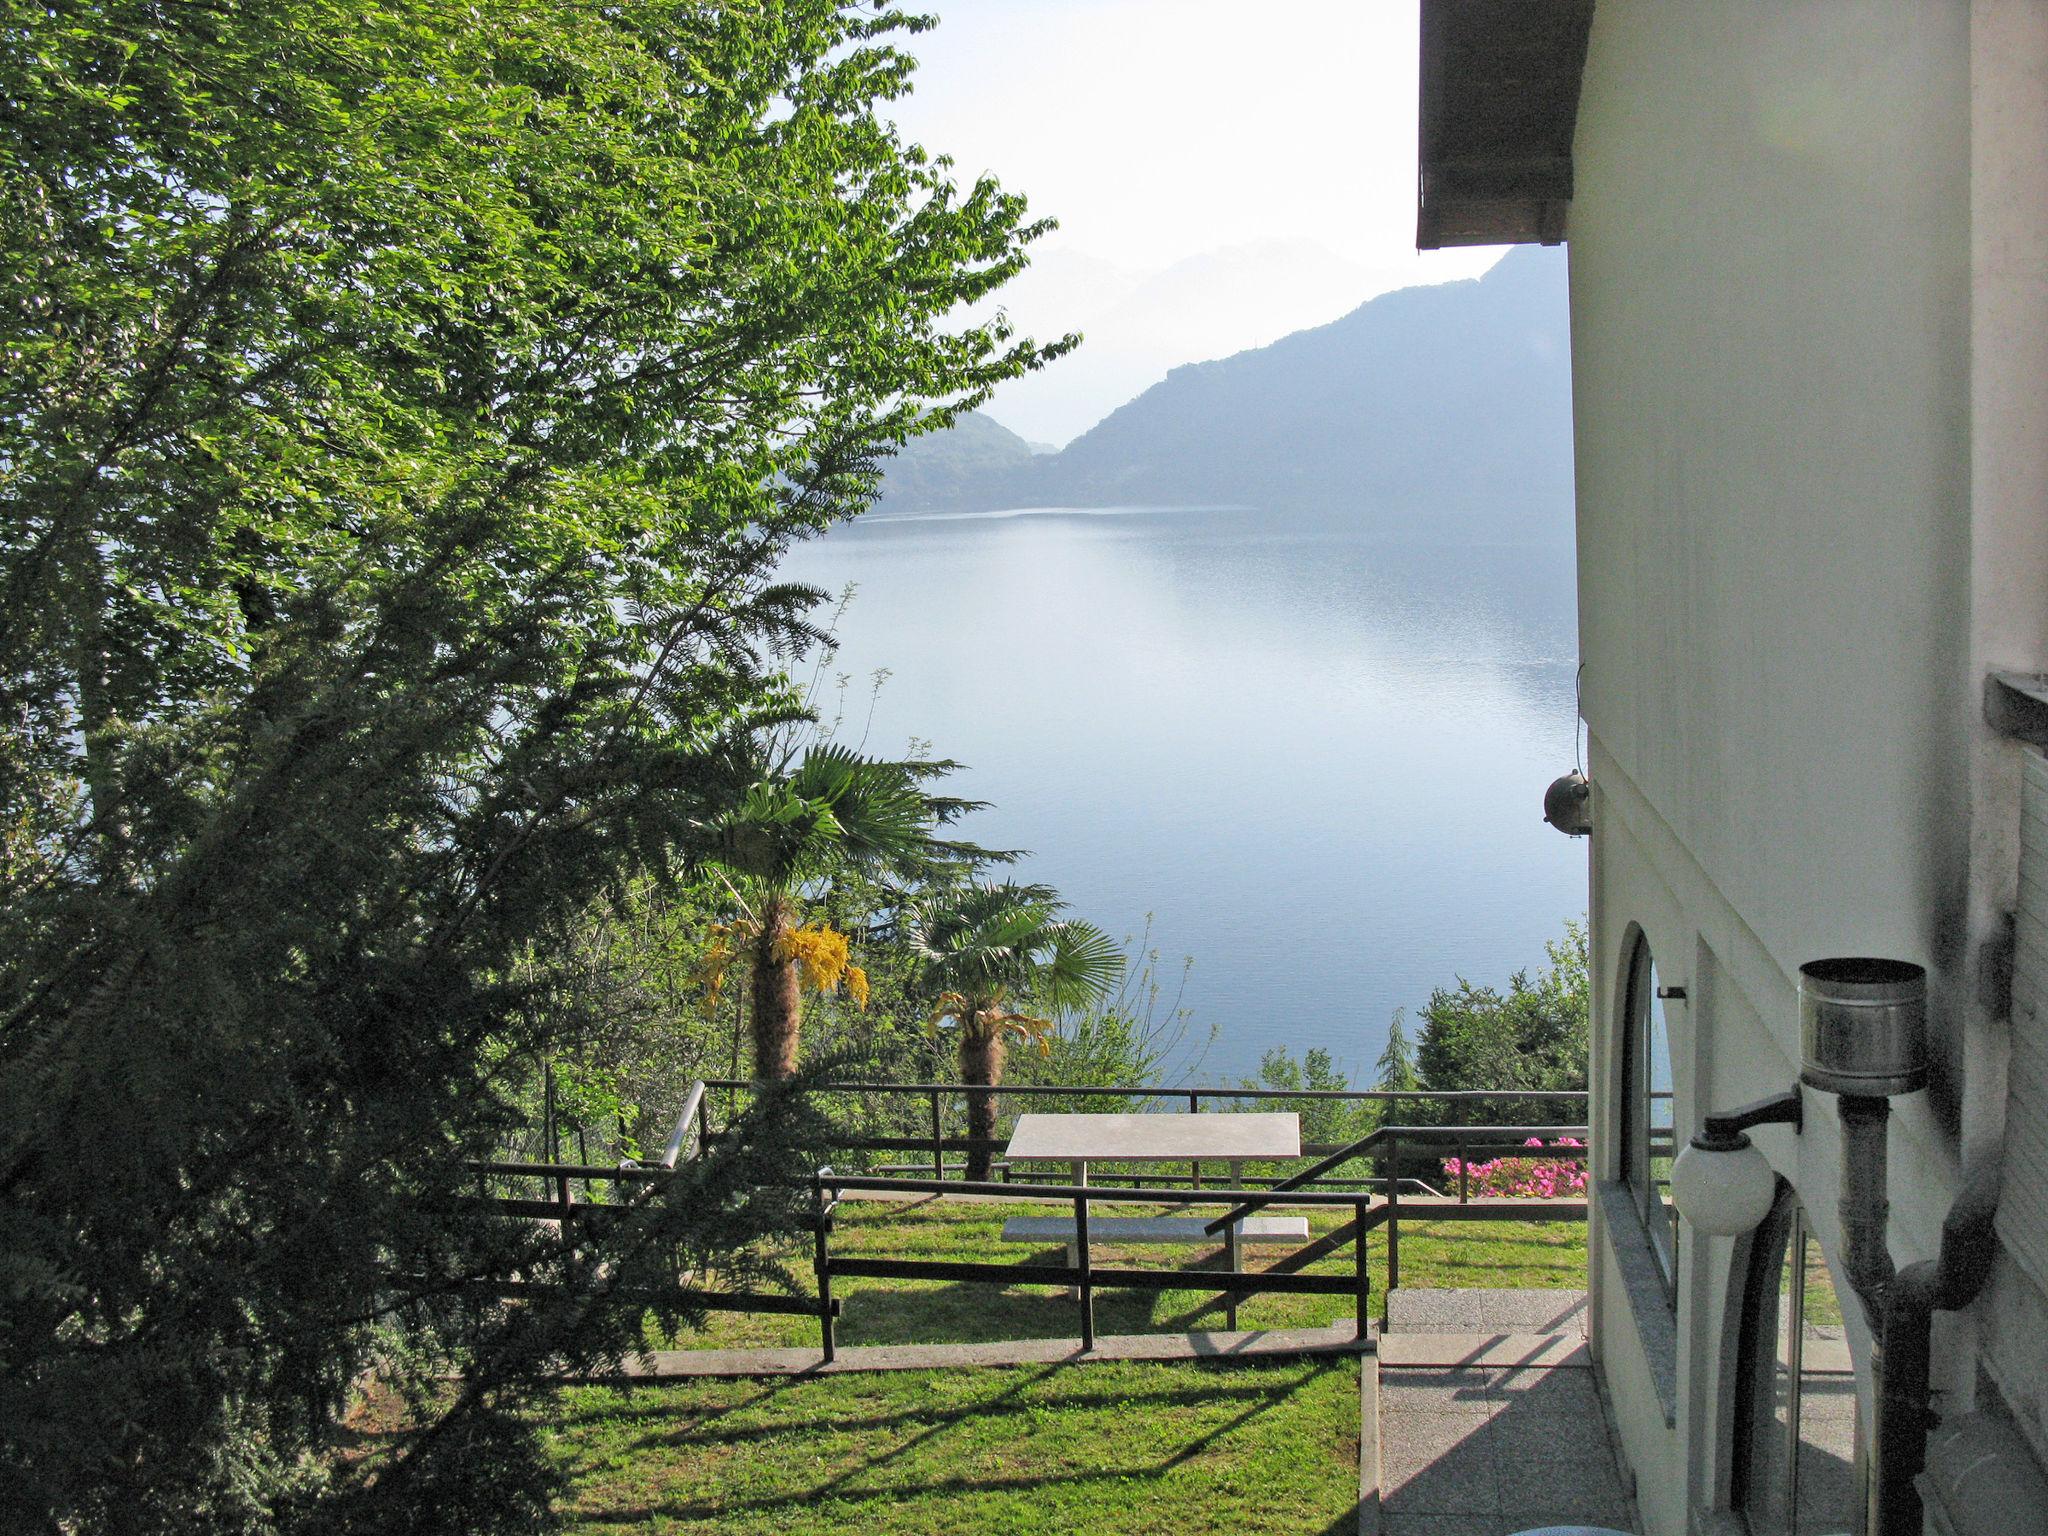 Photo 1 - House in Pianello del Lario with garden and mountain view